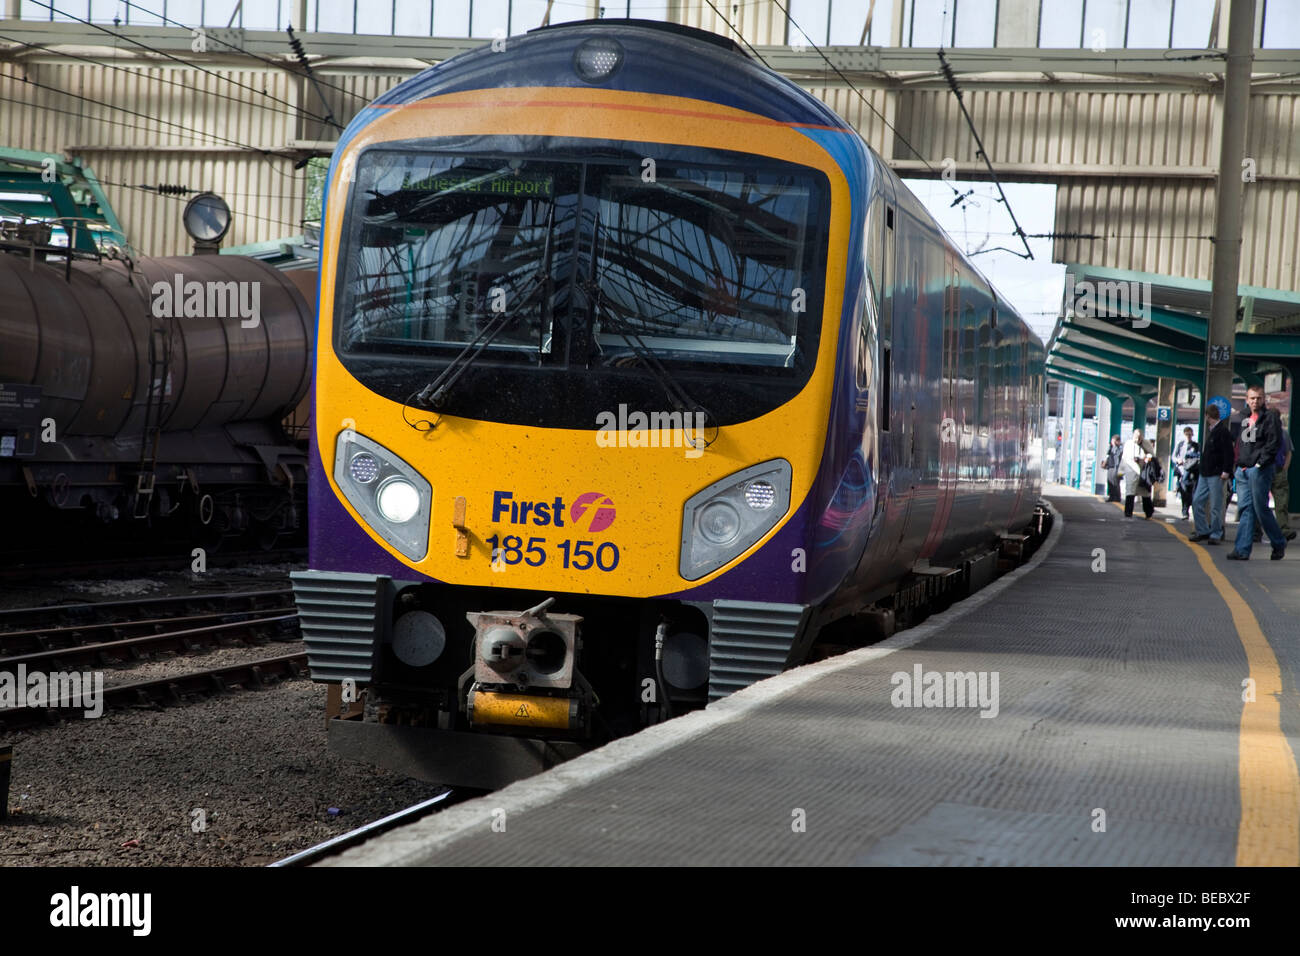 Class 185 First Railway train at Carlisle Station, Cumbria, UK Stock Photo